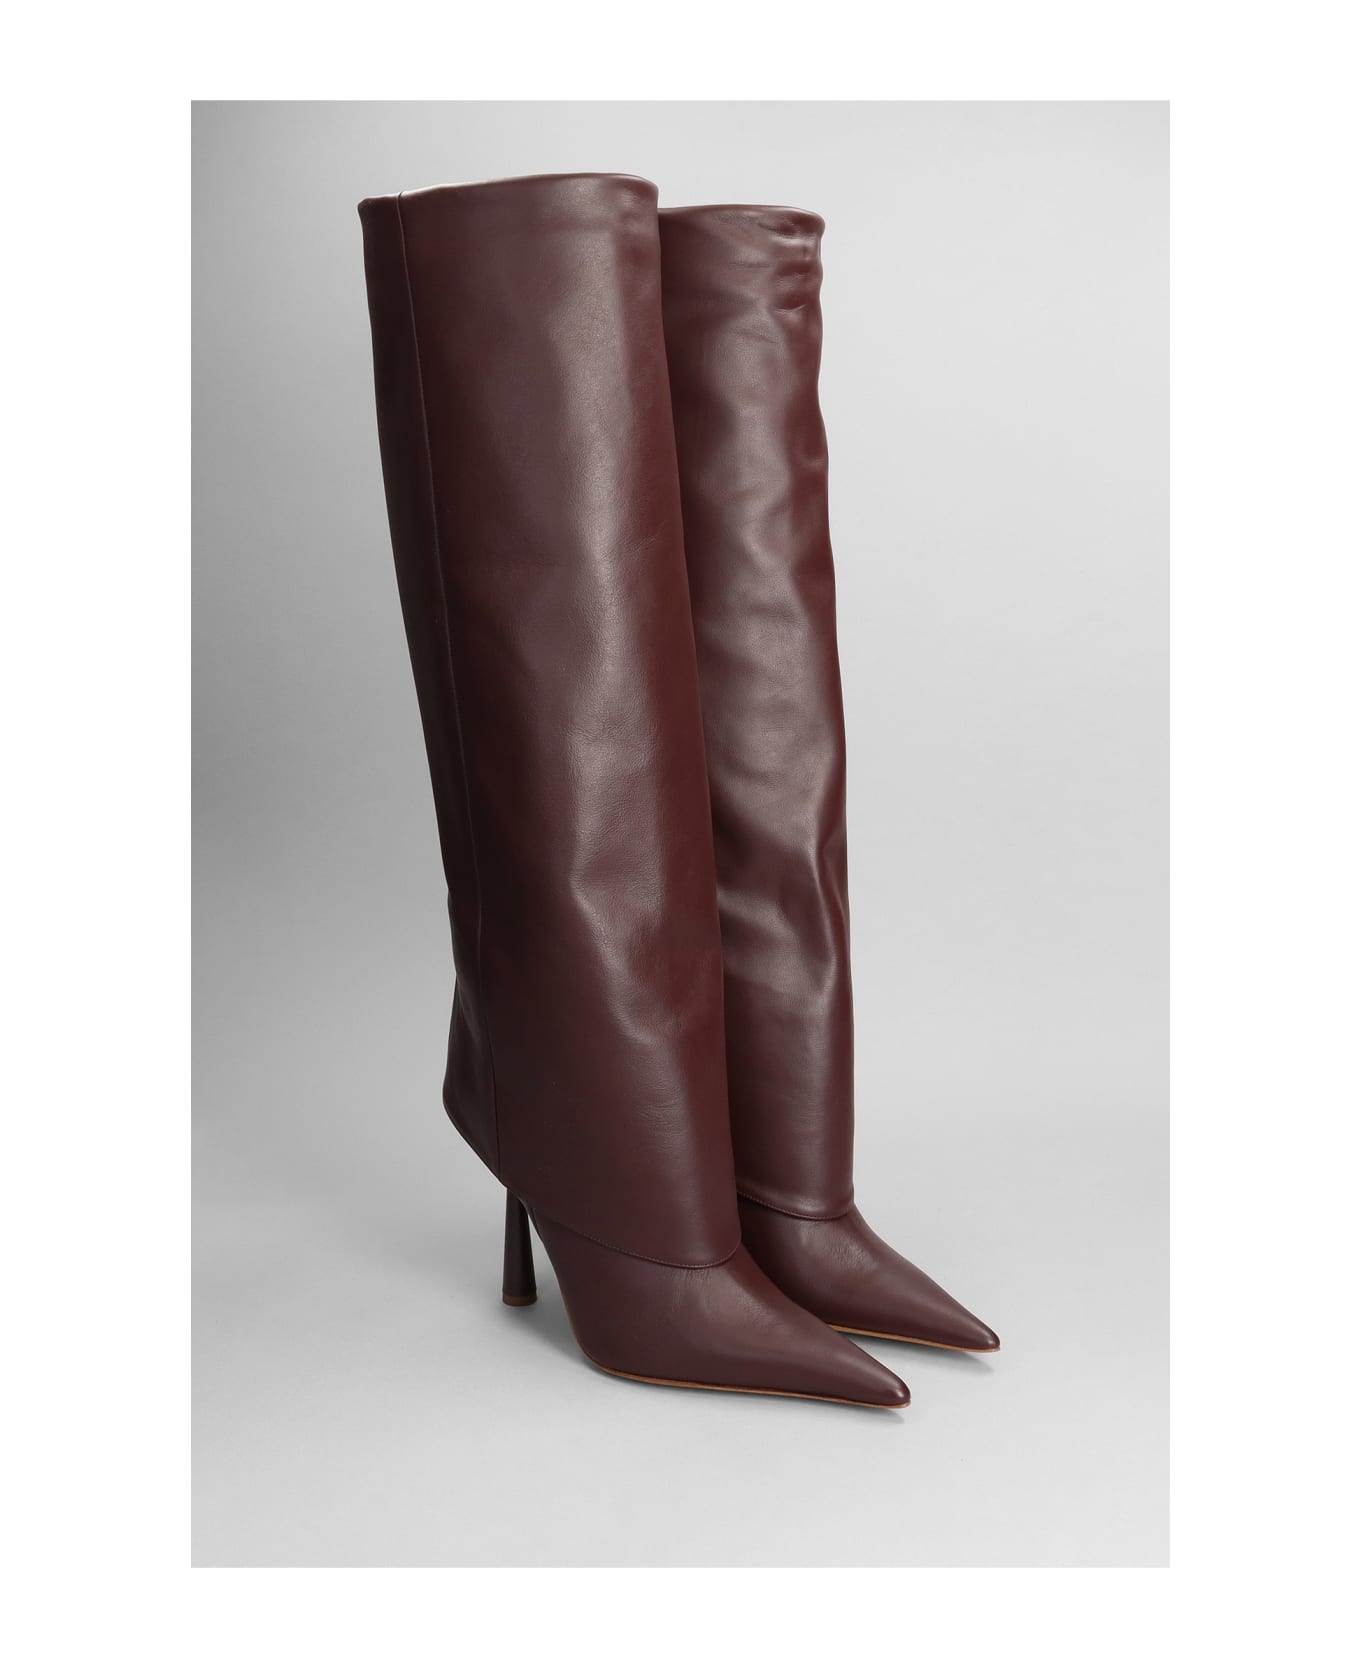 GIA BORGHINI Rhw31 High Heels Boots In Dark Brown Leather - dark brown